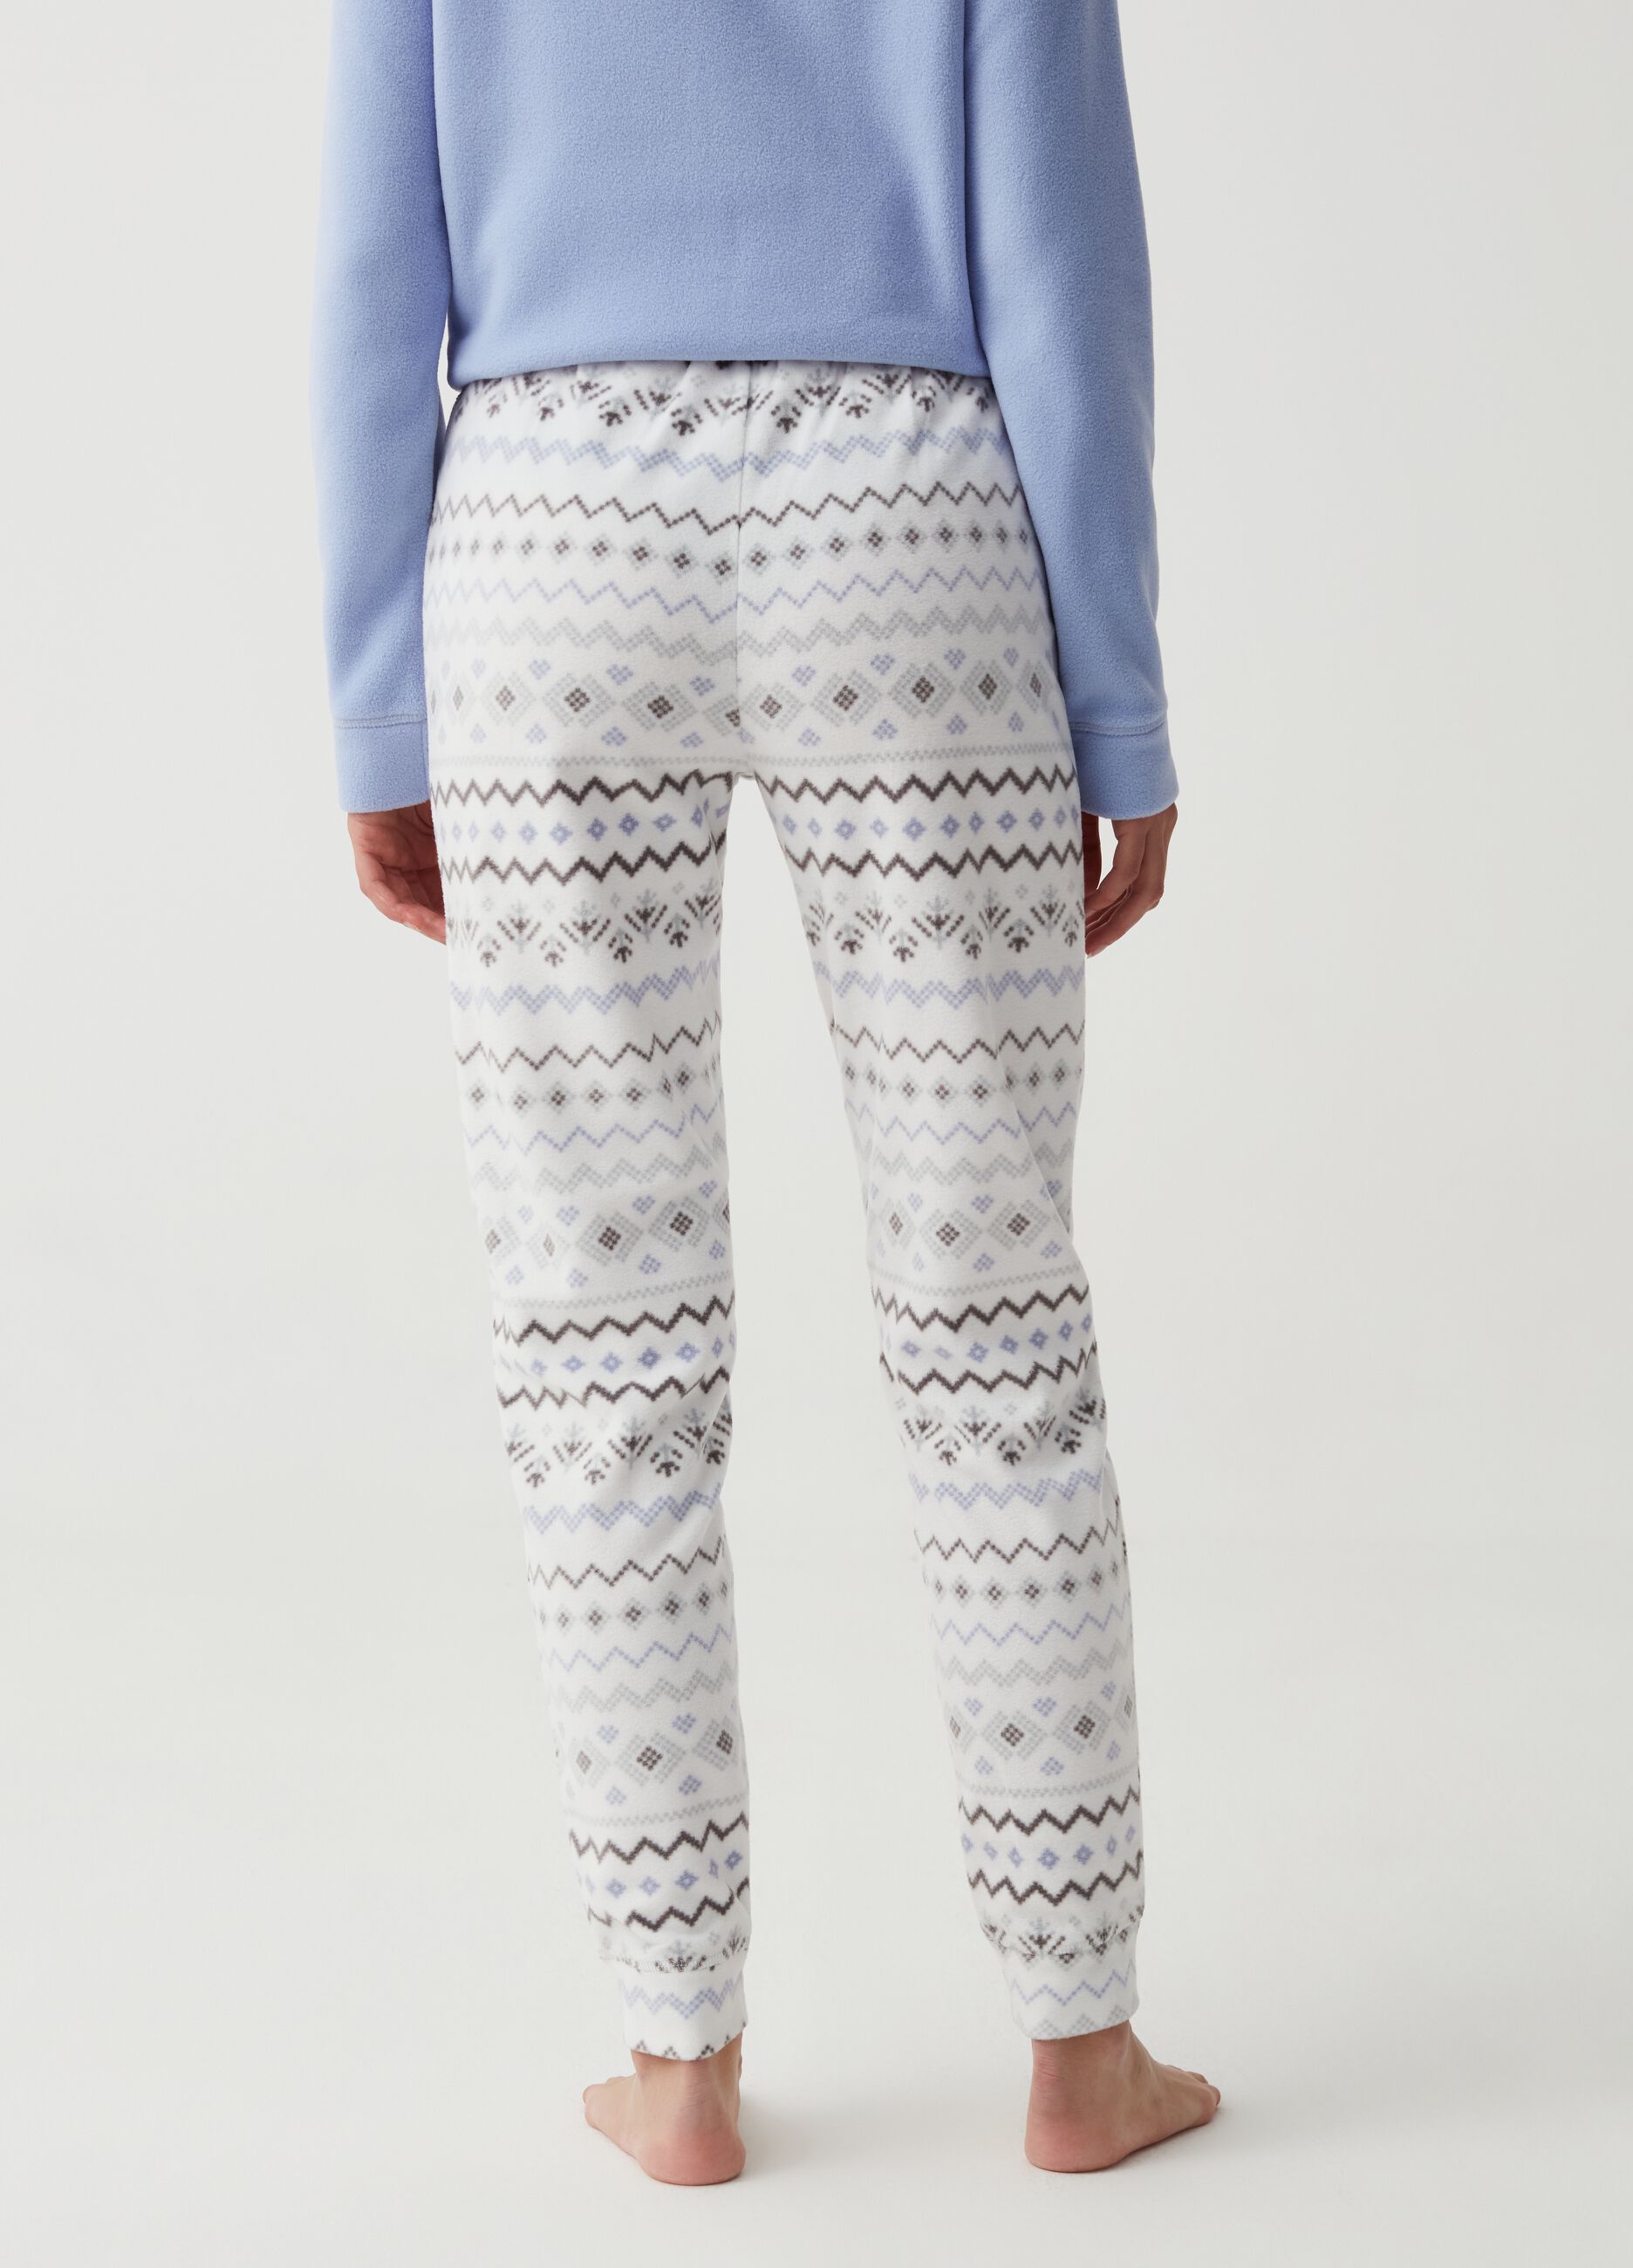 Pantalone pigiama con disegno norvegese